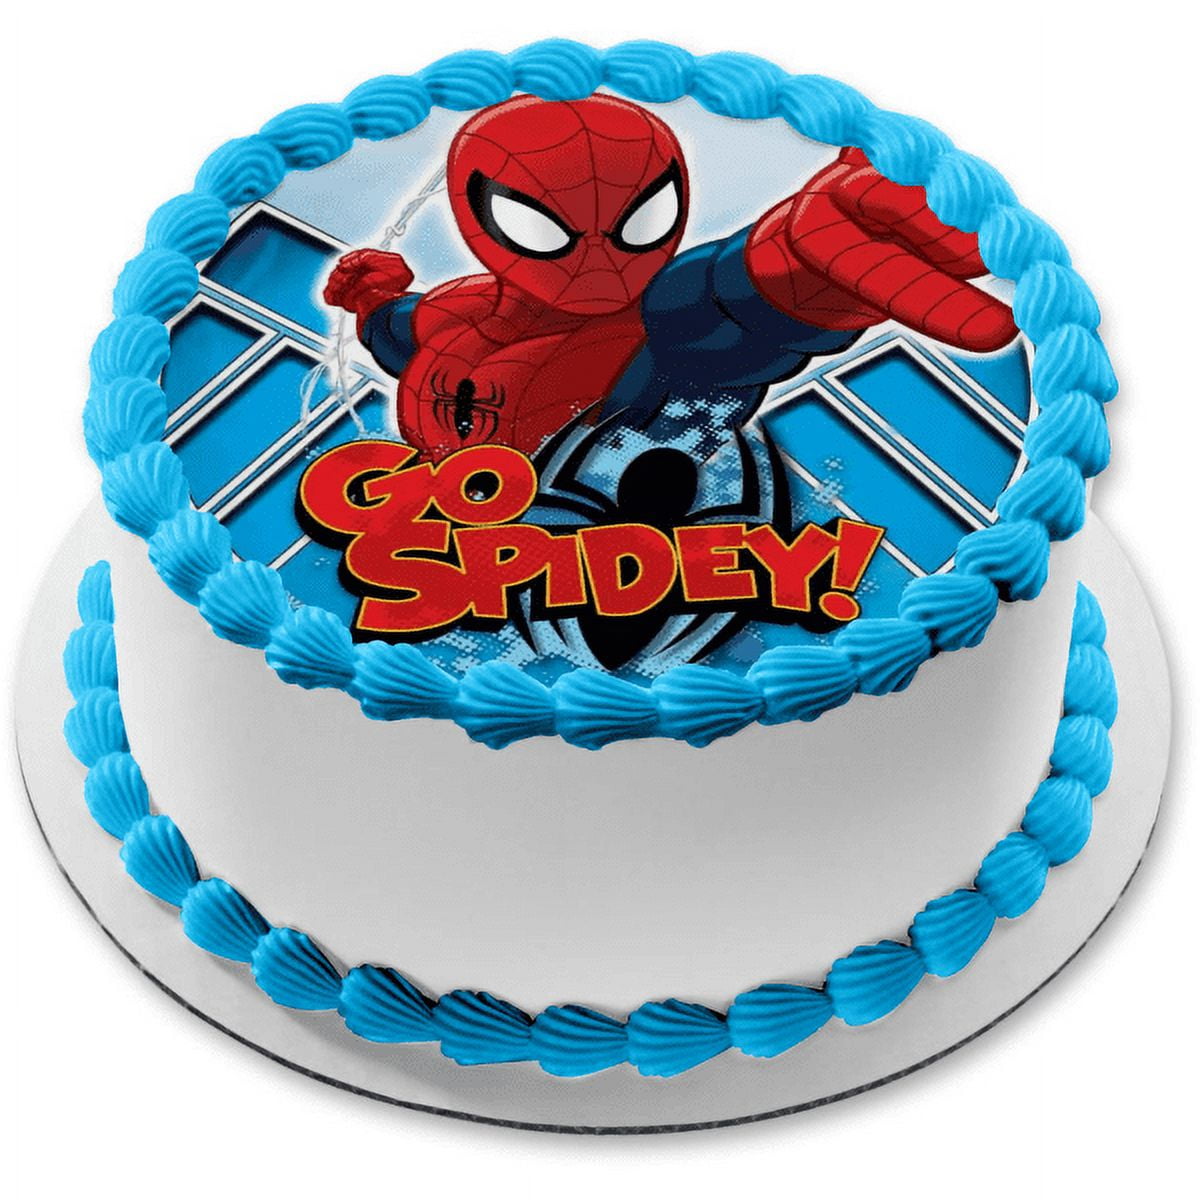 Spiderman Cake | cakesplosion